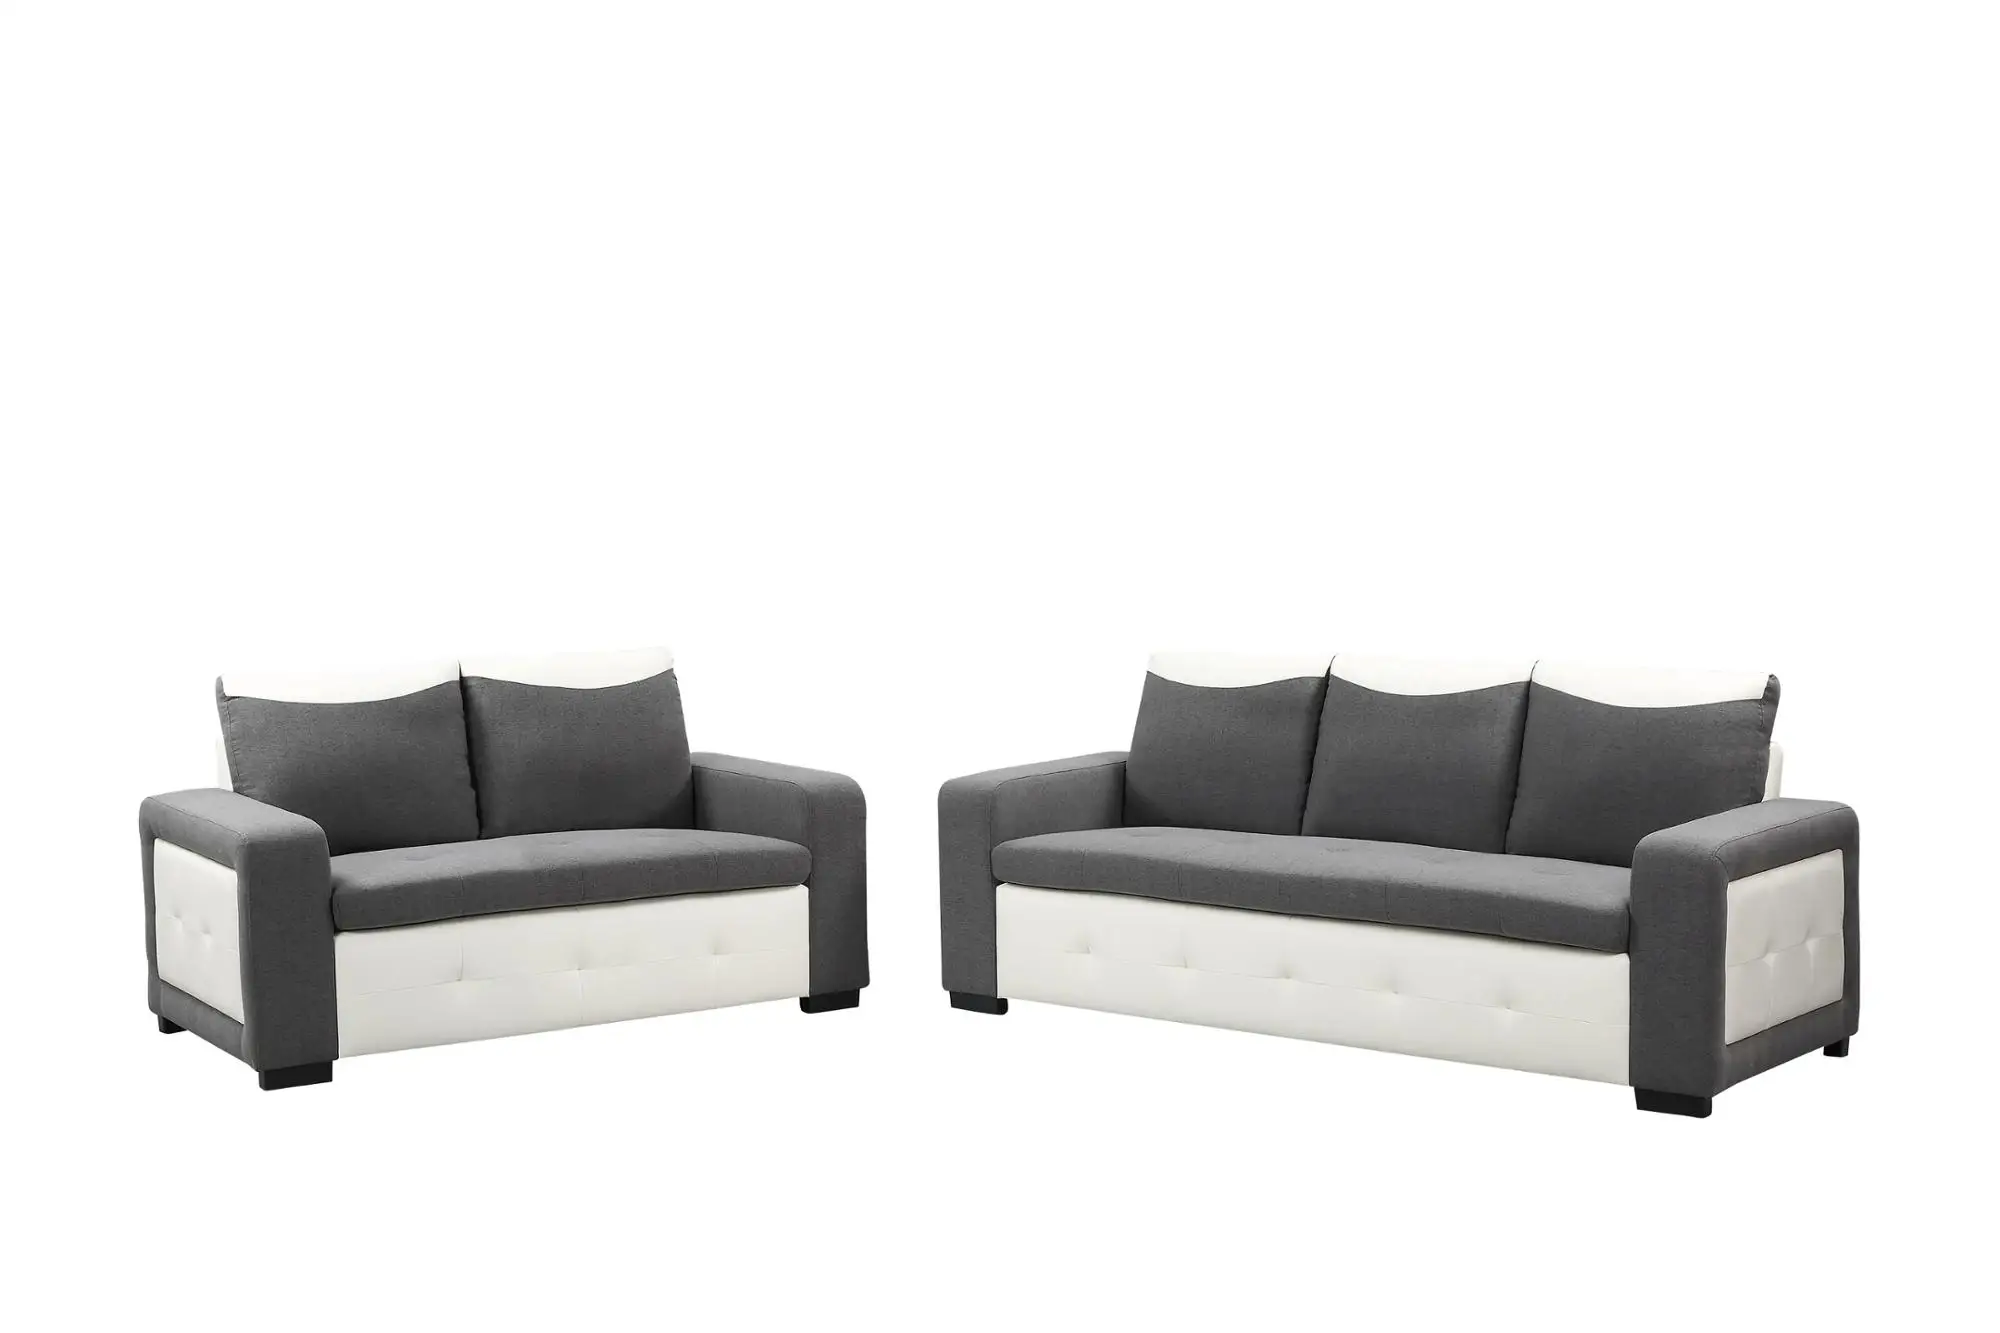 Shenzhen Sofa Supplier Furniture Living Room Sofa Set With 2 Tone Design Buy High Quality Alibaba Sofa